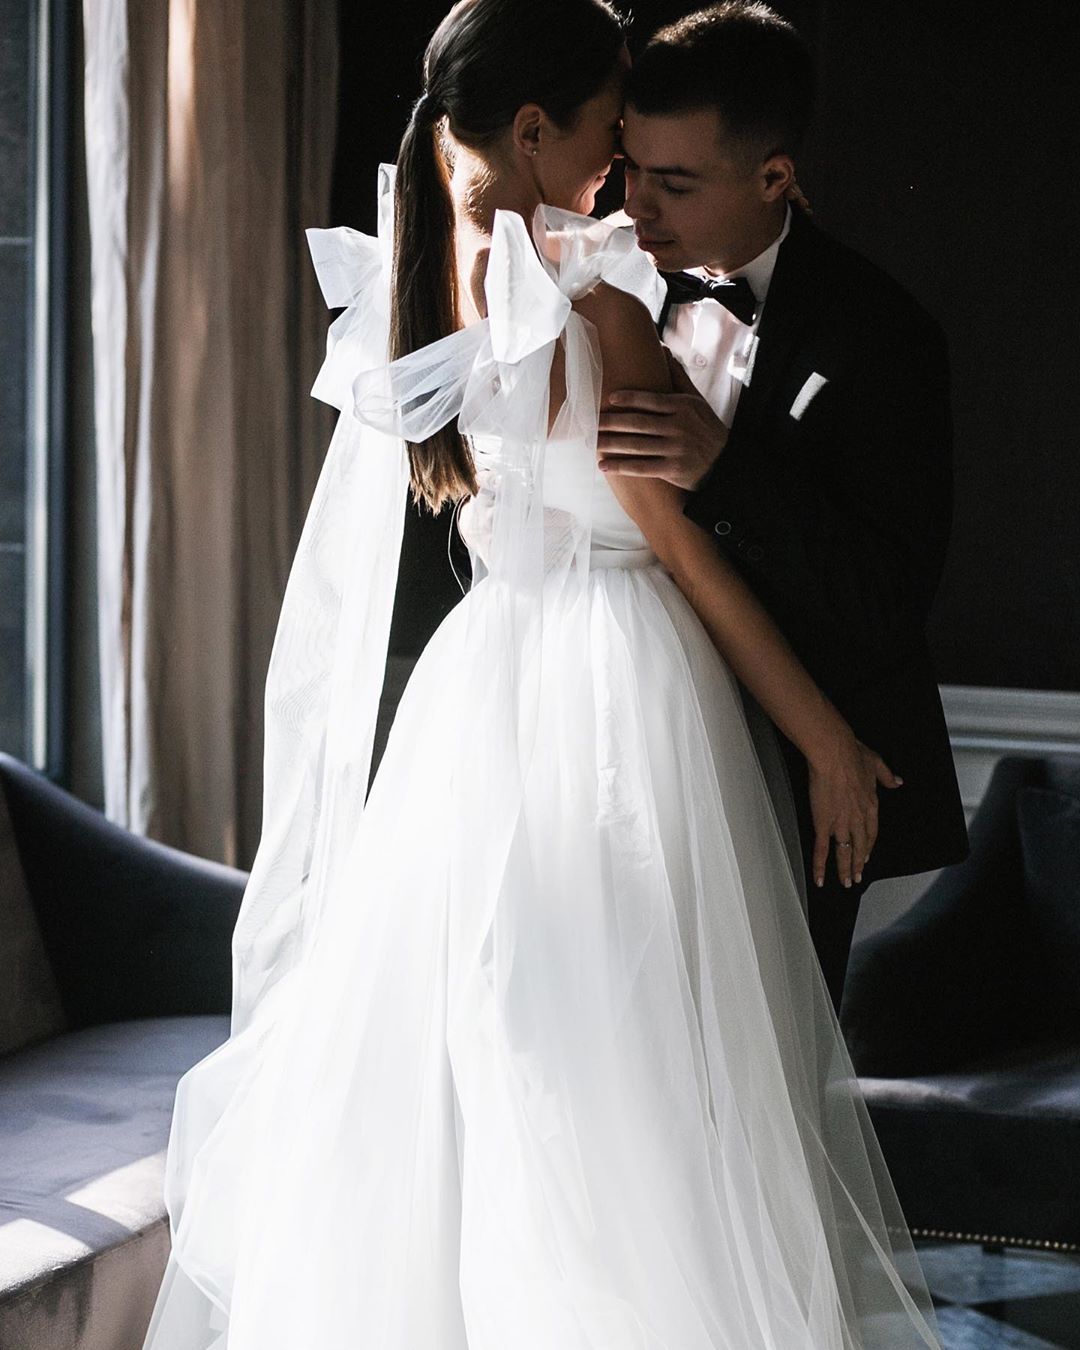 JOLIE - modern and minimal wedding dress – I SWEAR YOU